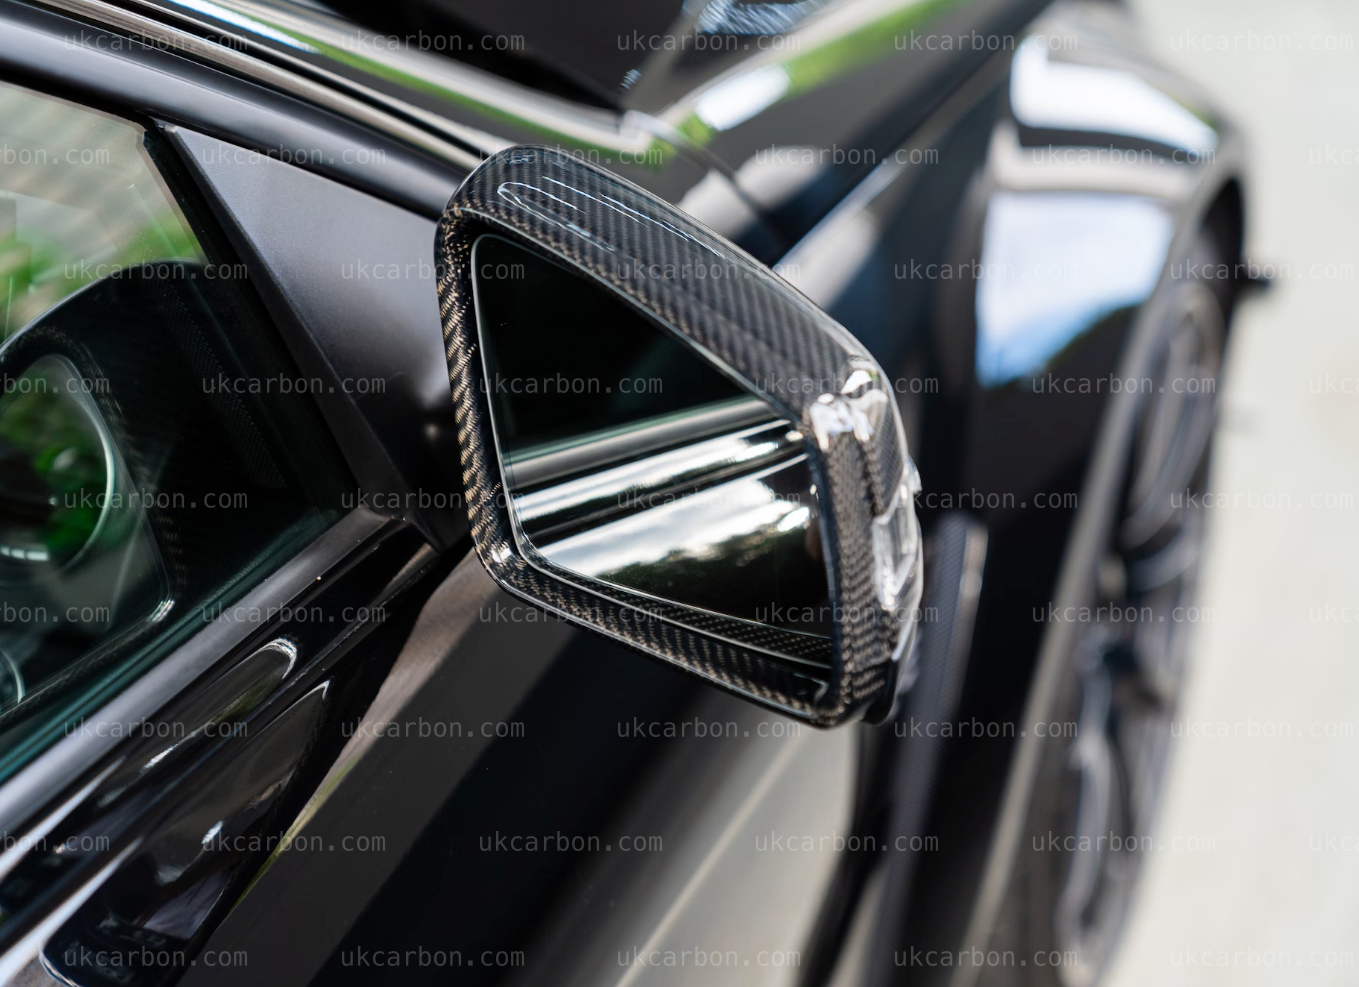 Mercedes Benz C E Class Carbon Fibre Mirror Cover Replacements by UKCarbon